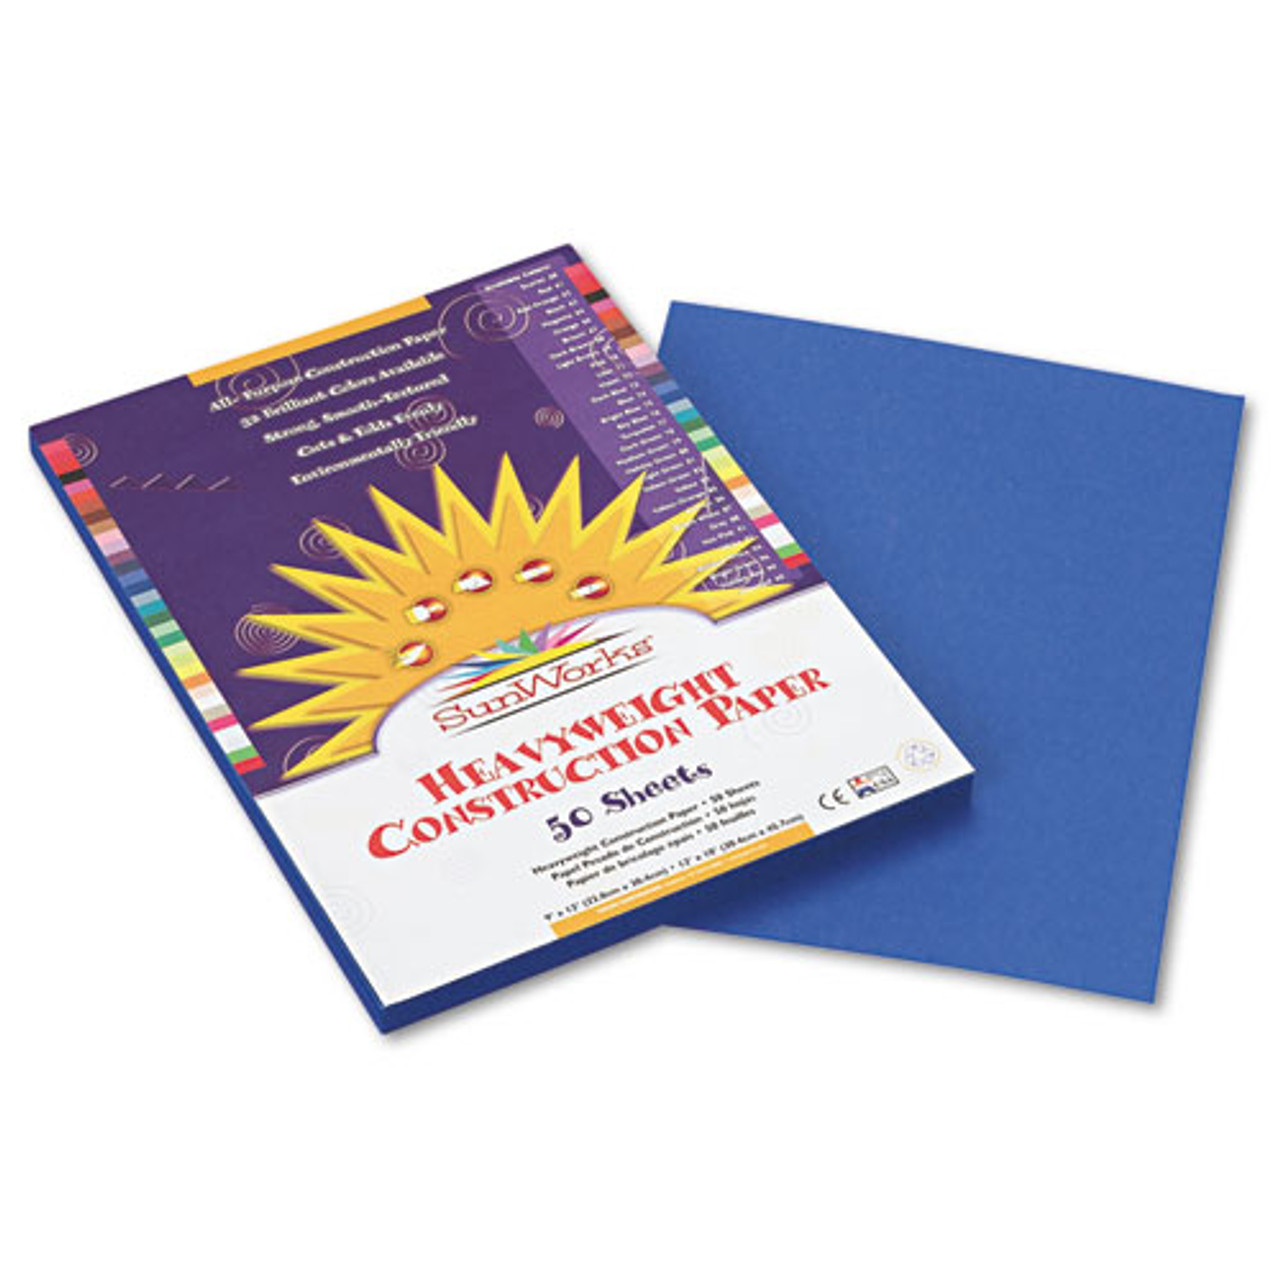 Sunworks Bright Blue 12X18 Construction Paper - PAC7507